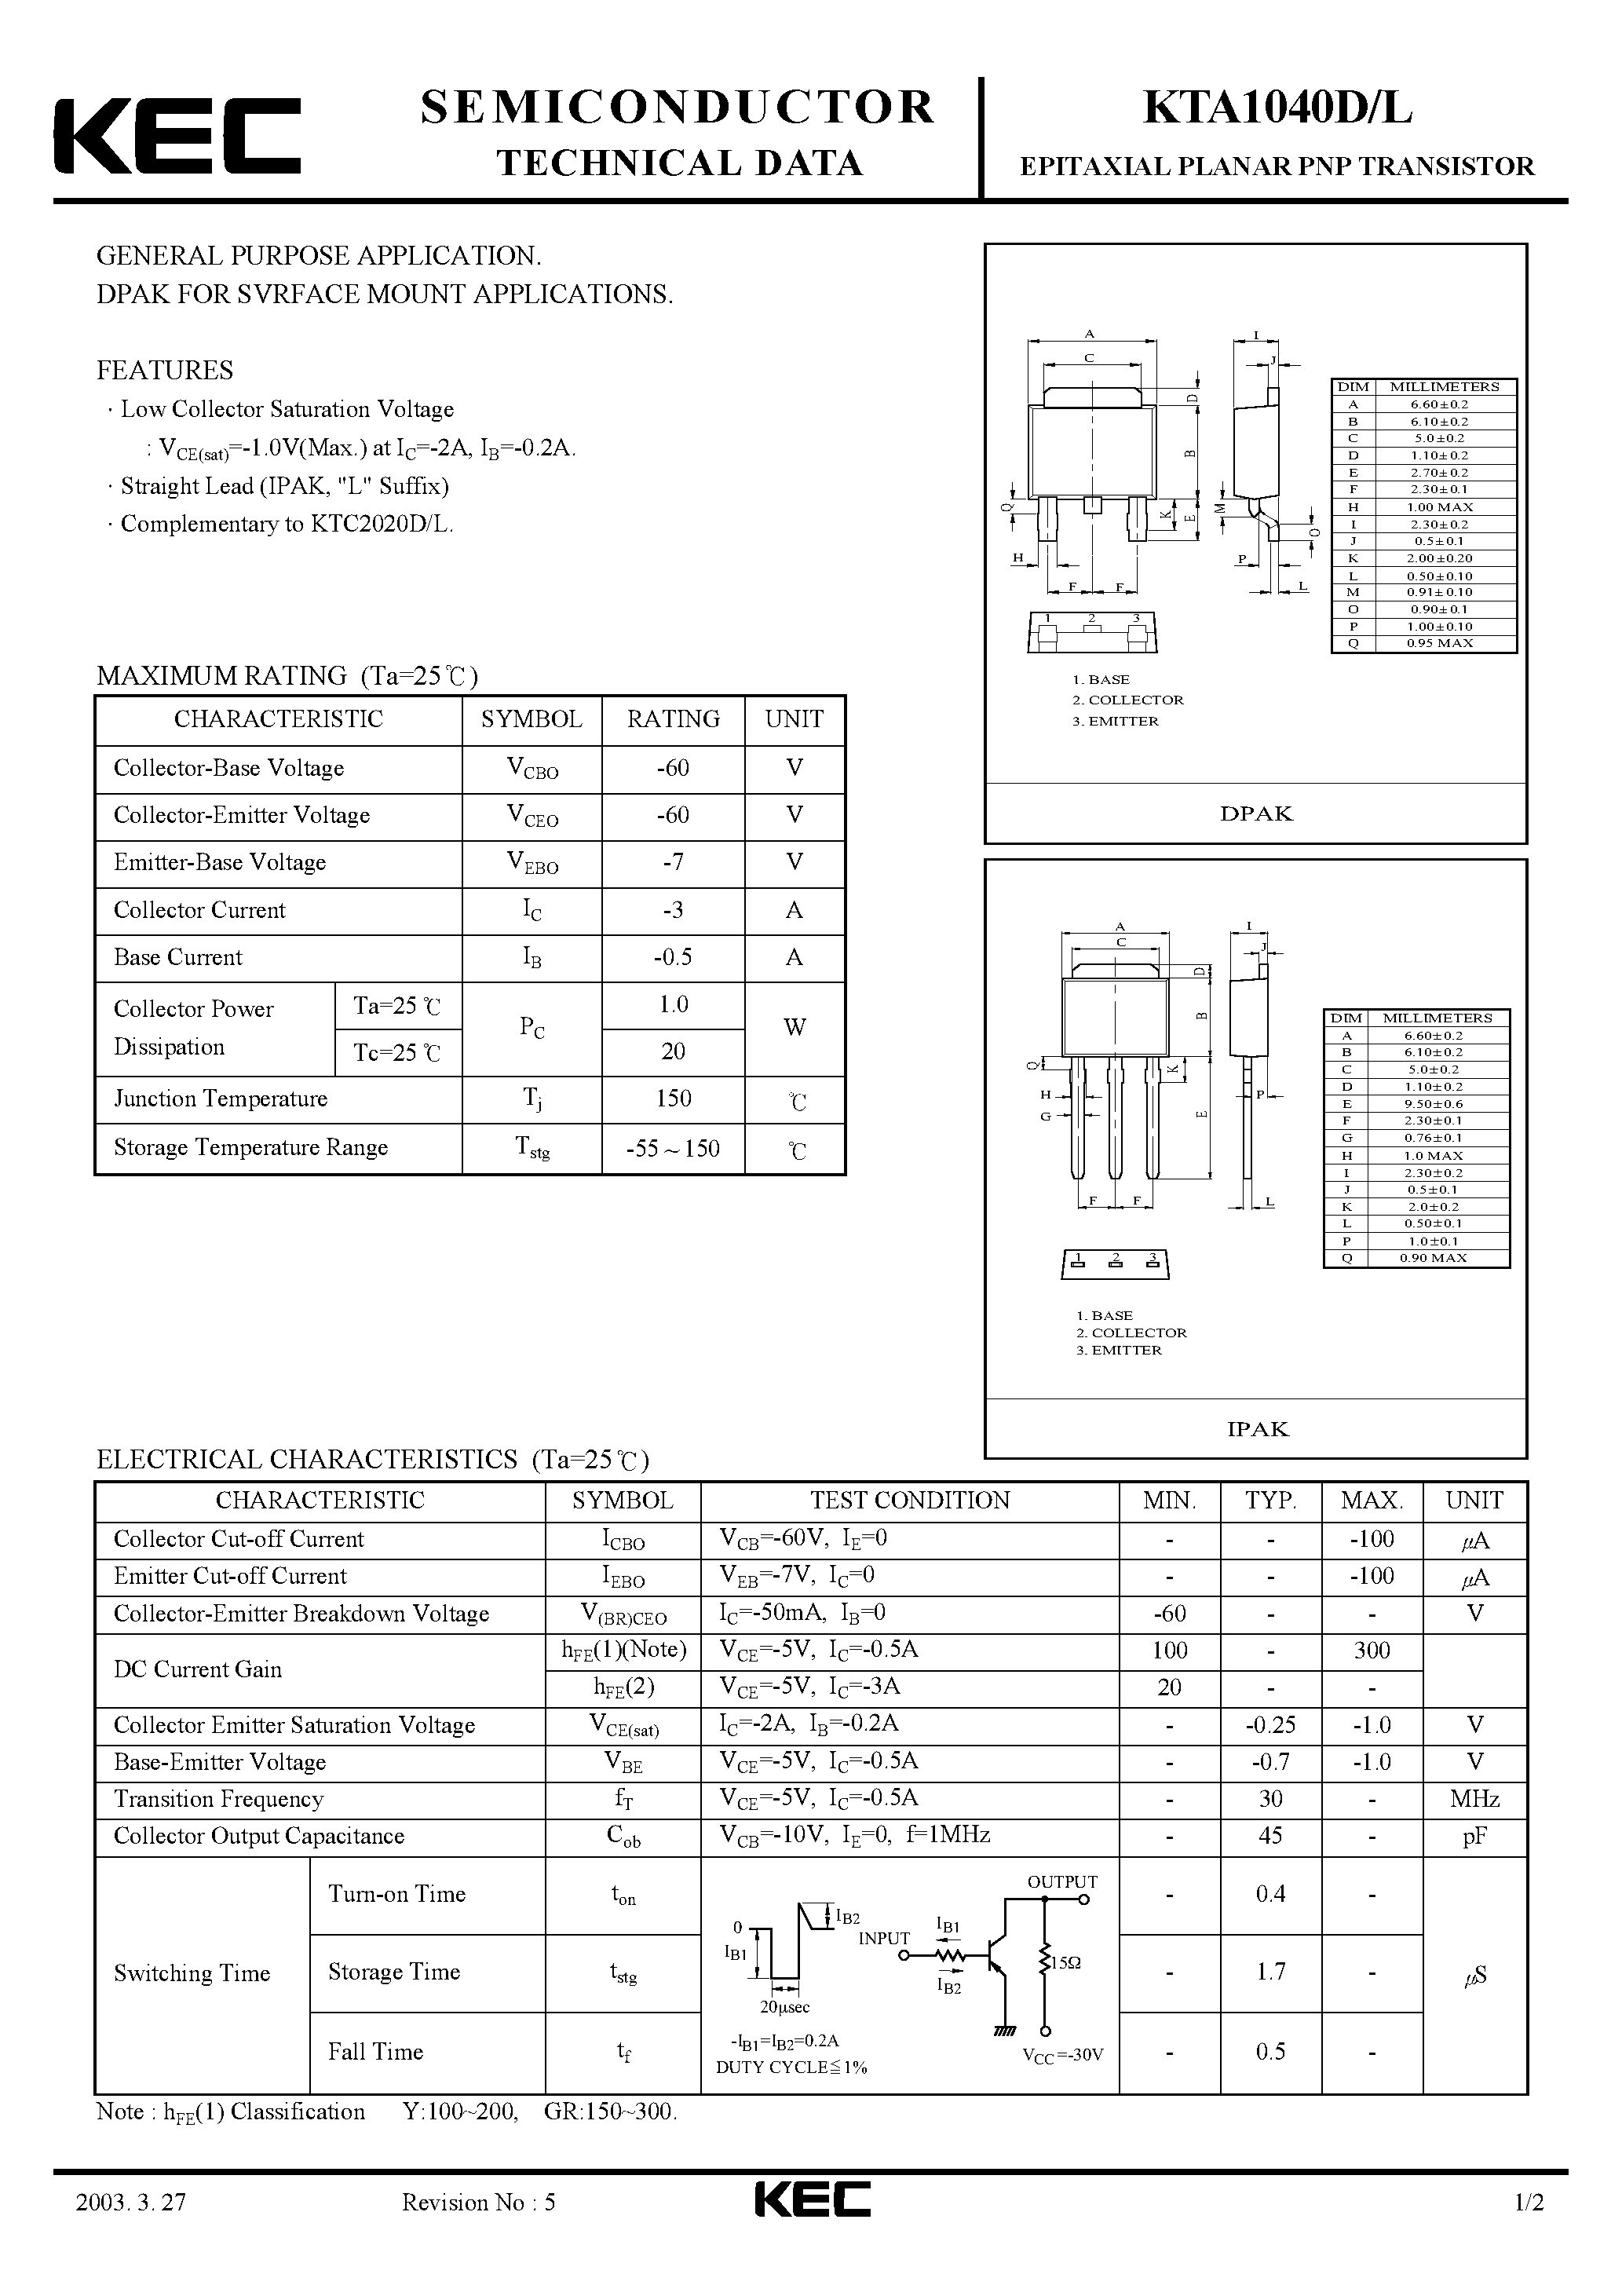 Datasheet KTA1040D - EPITAXIAL PLANAR PNP TRANSISTOR (GENERAL PURPOSE/ DPAK FOR SVRFACE MOUNT) page 1